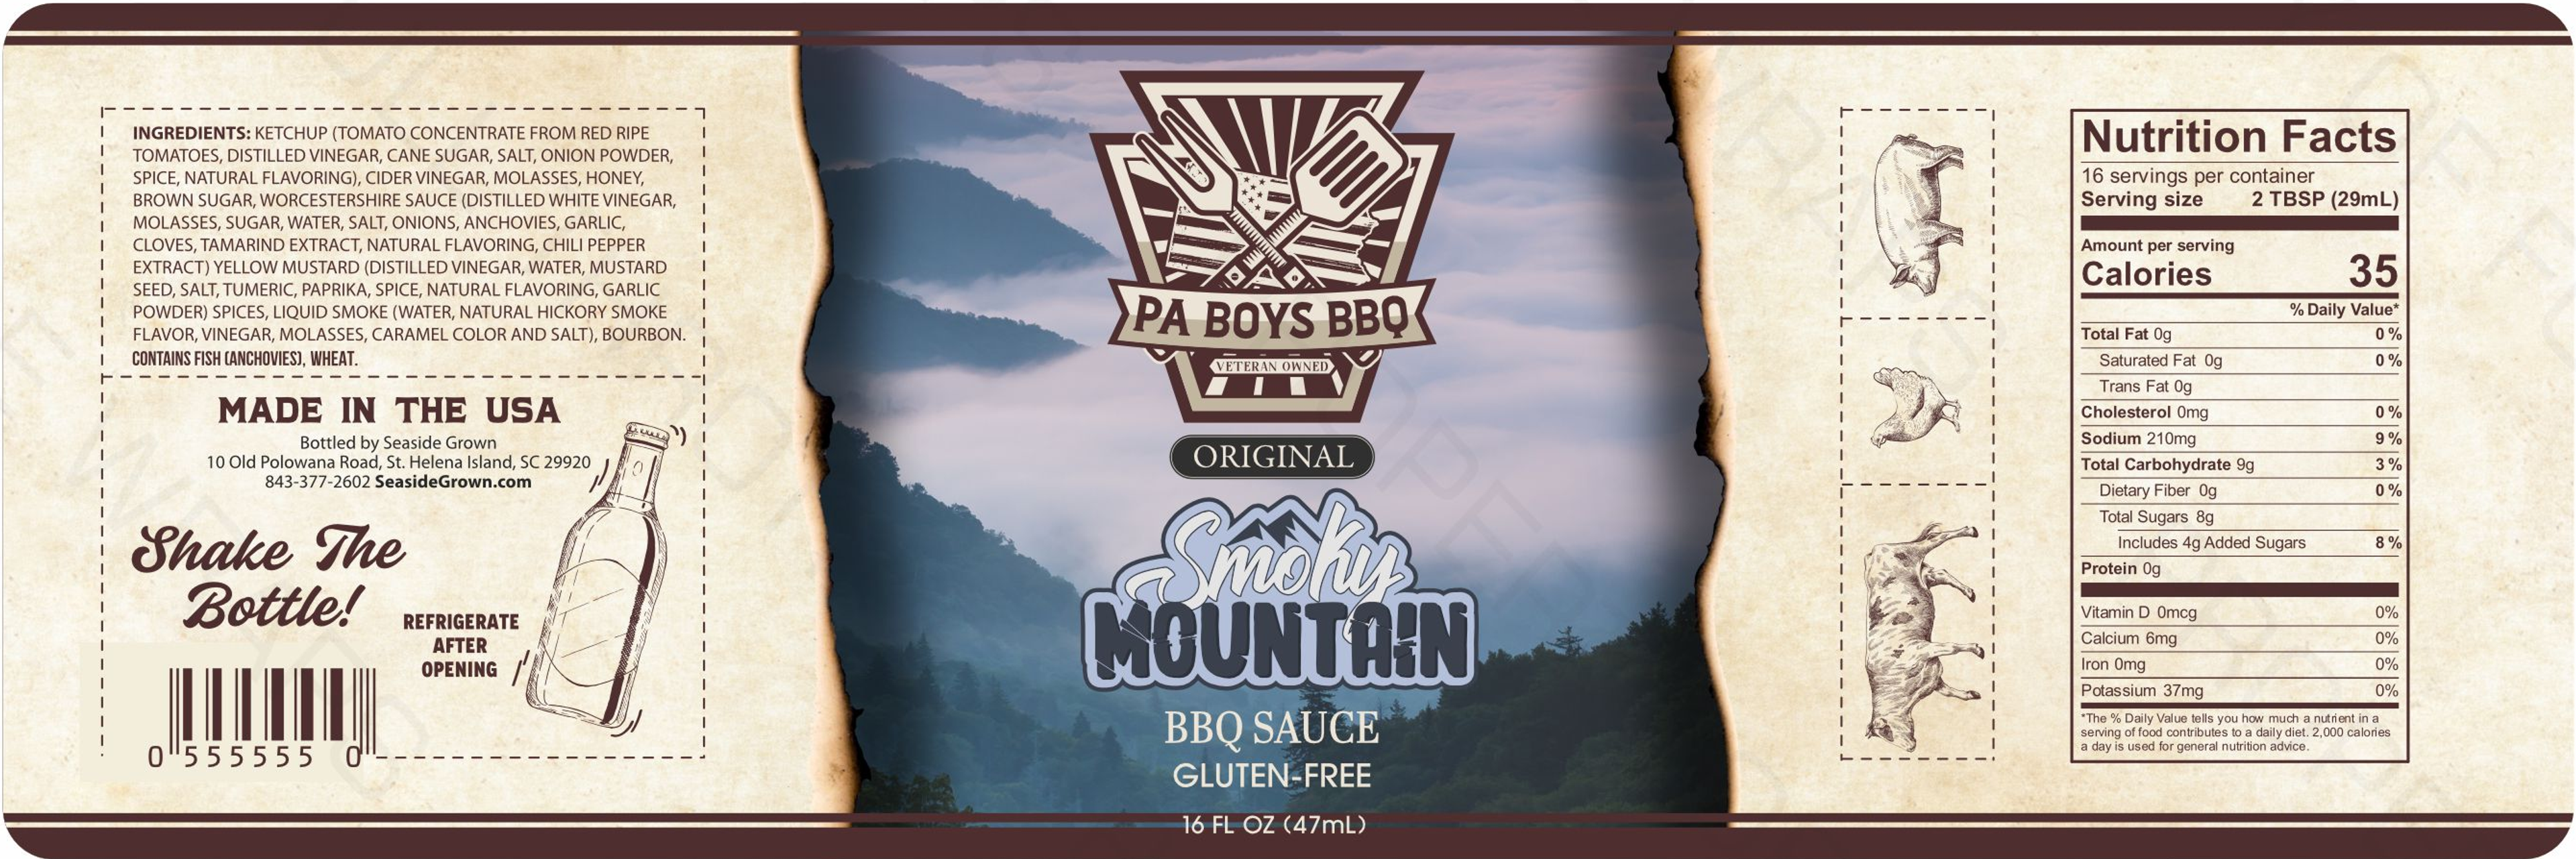 PA BOYS BBQ Smoky Mountain